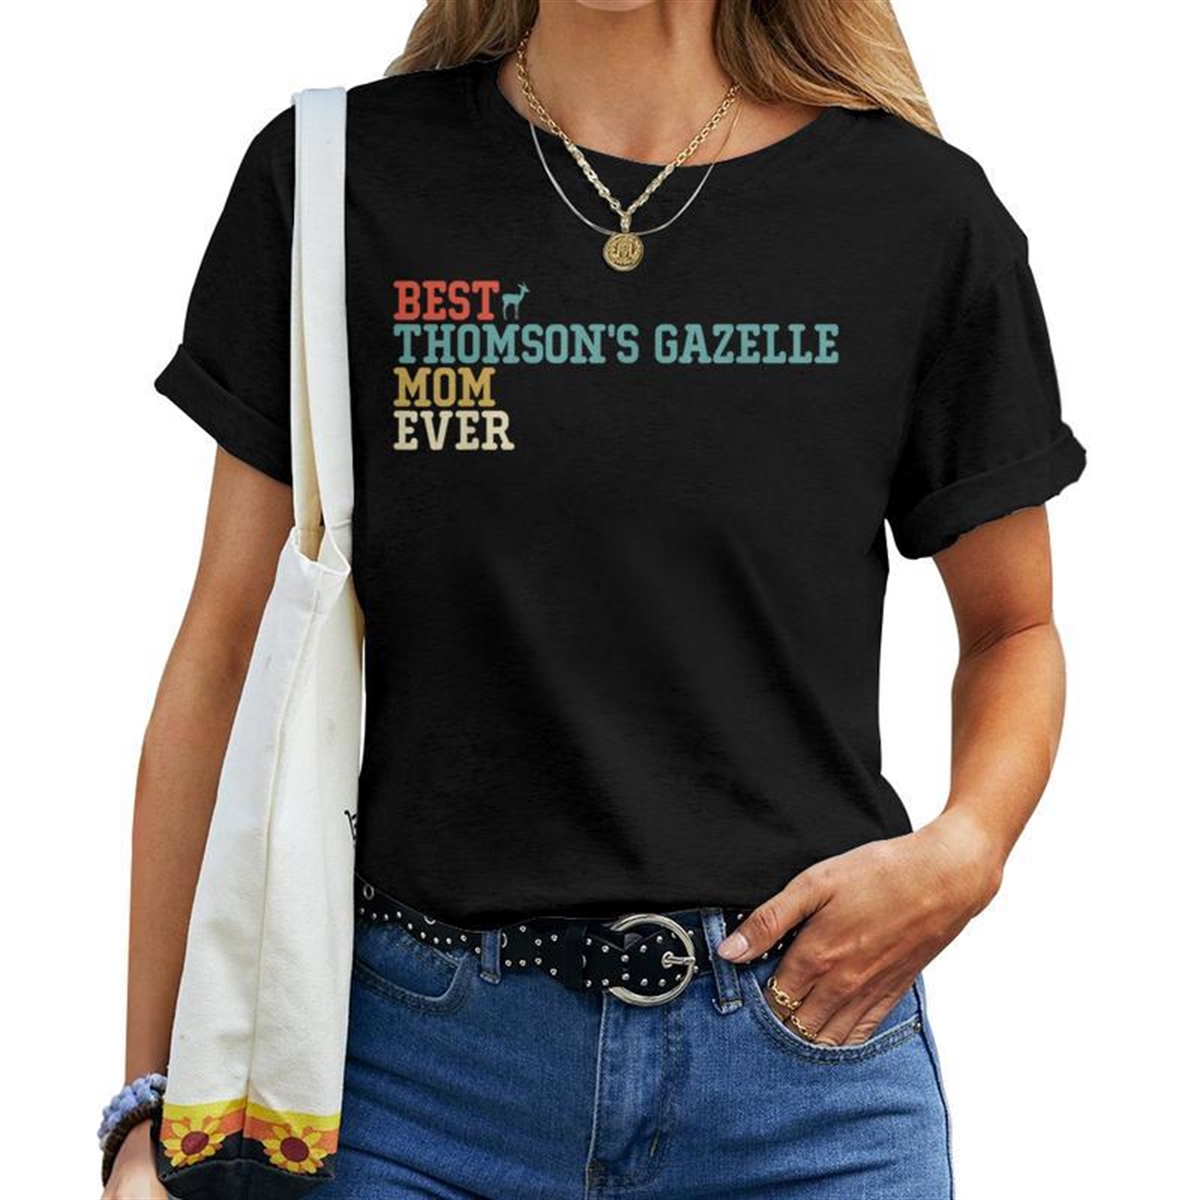 Best Thomson’s Gazelle Mom Ever Vintage Retro Women T-shirt